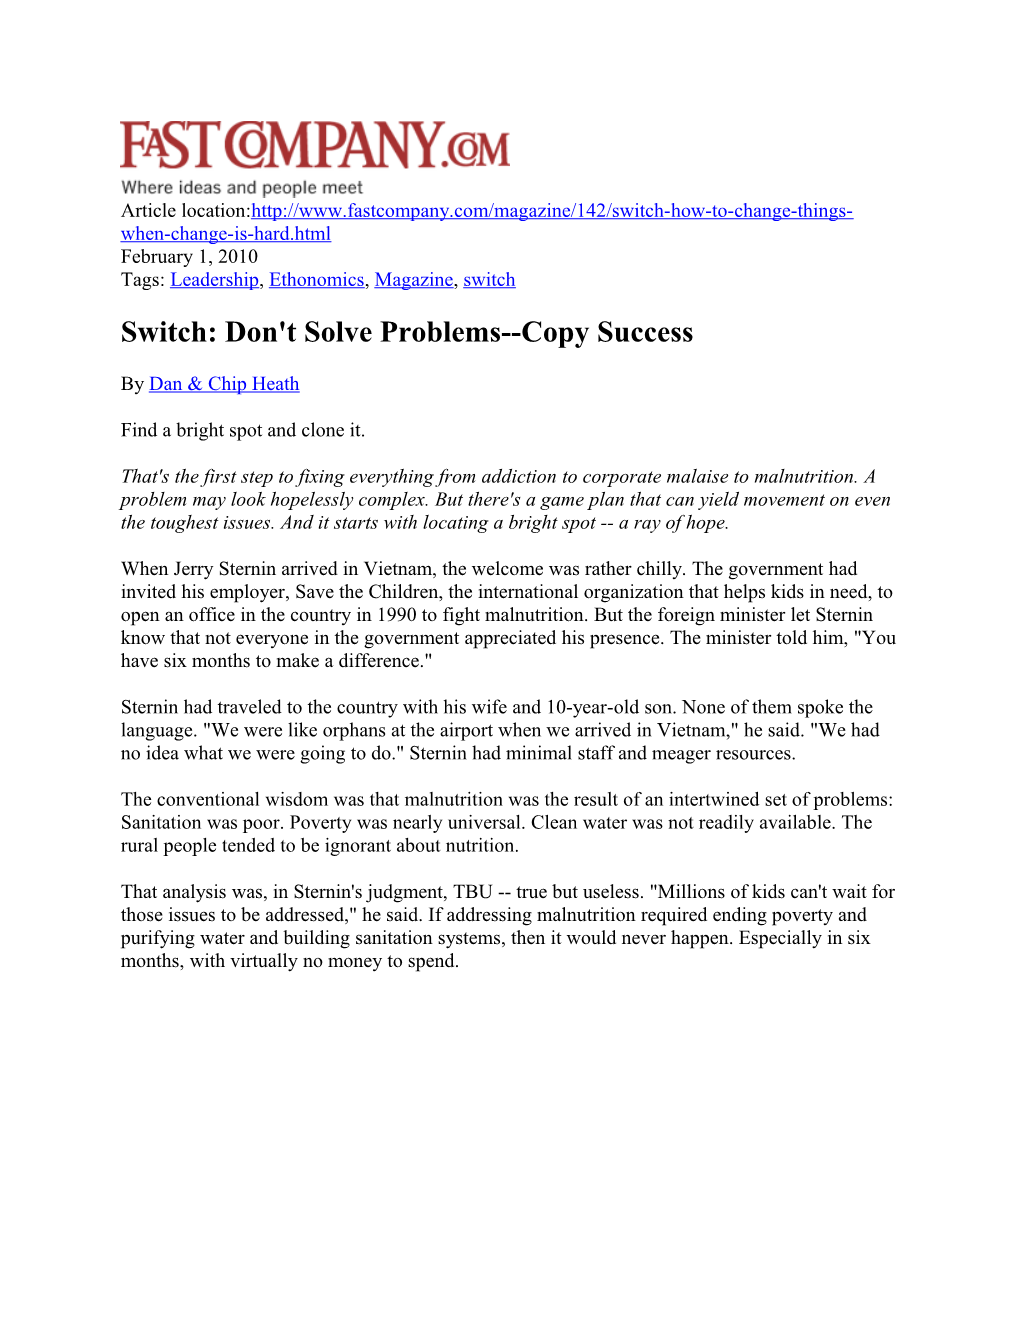 Switch: Don't Solve Problems Copy Success